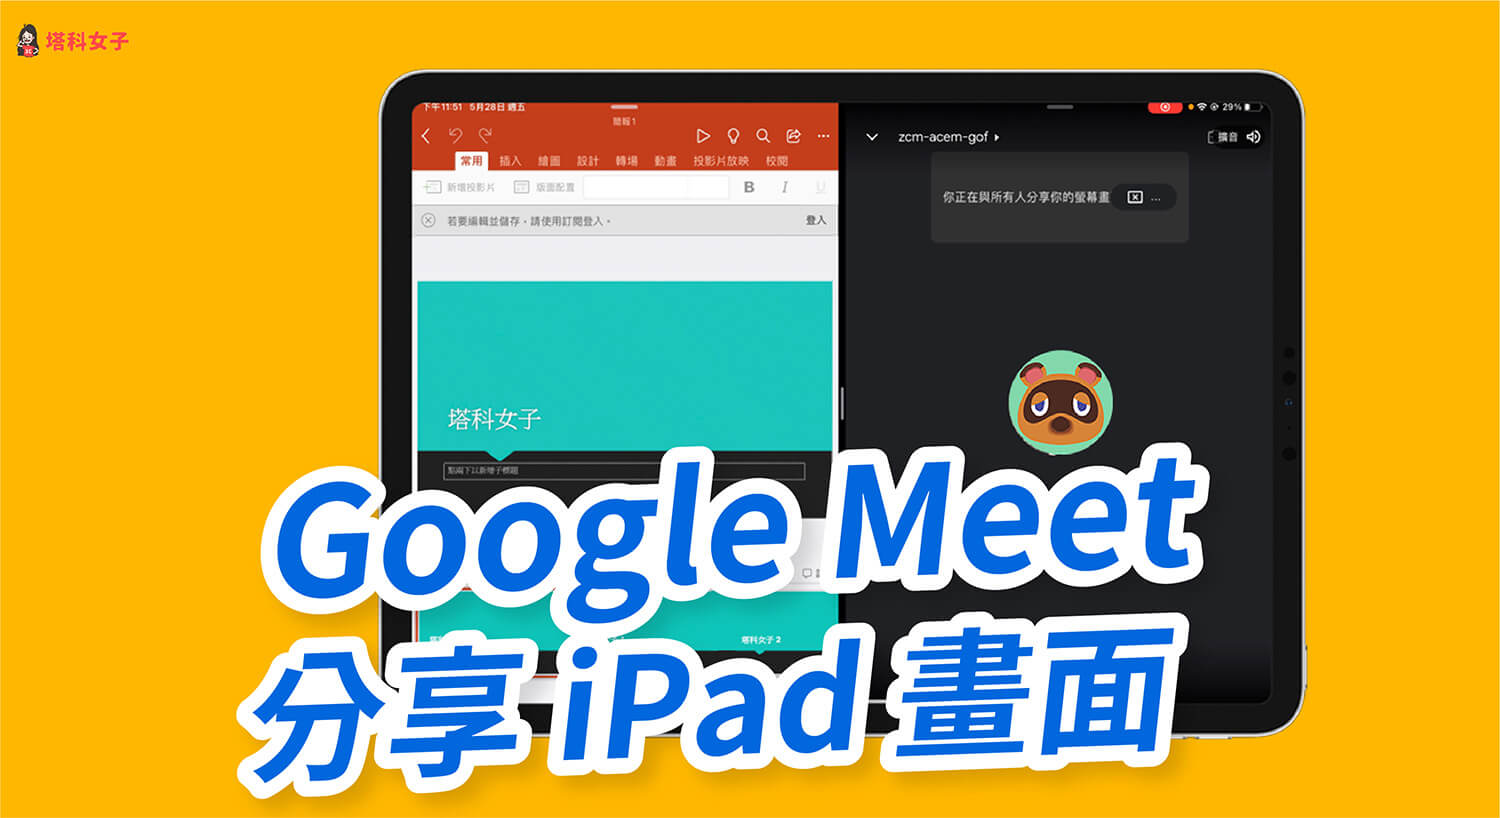 Google Meet iPad 版如何分享螢幕畫面？沒聲音怎麼辦？